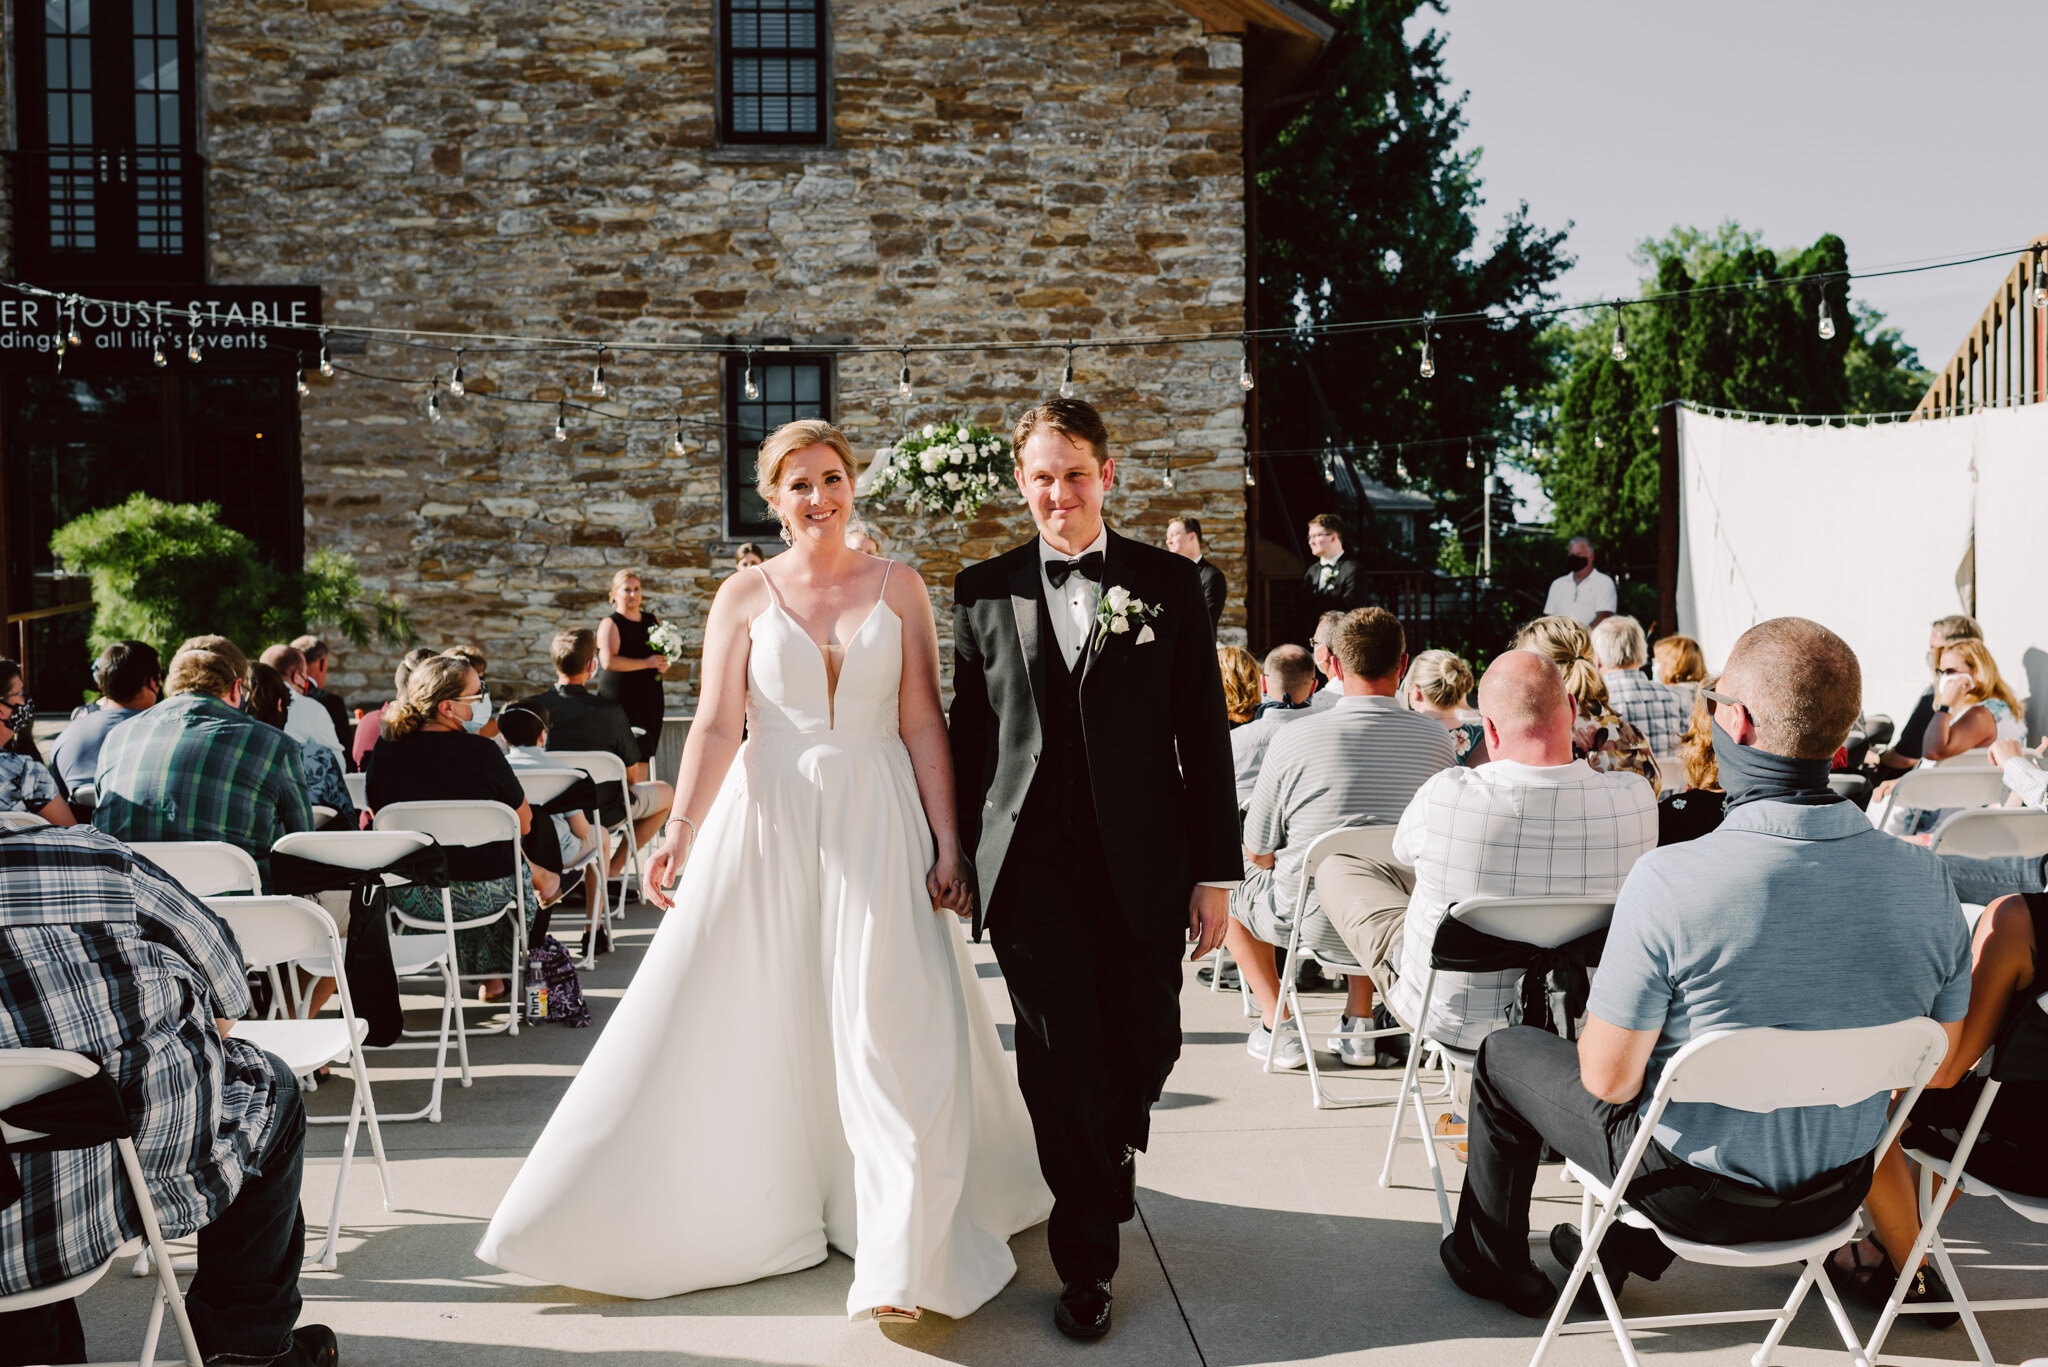 Palmer House Stable Solon, Iowa Summer Wedding - Iowa Wedding Photographer